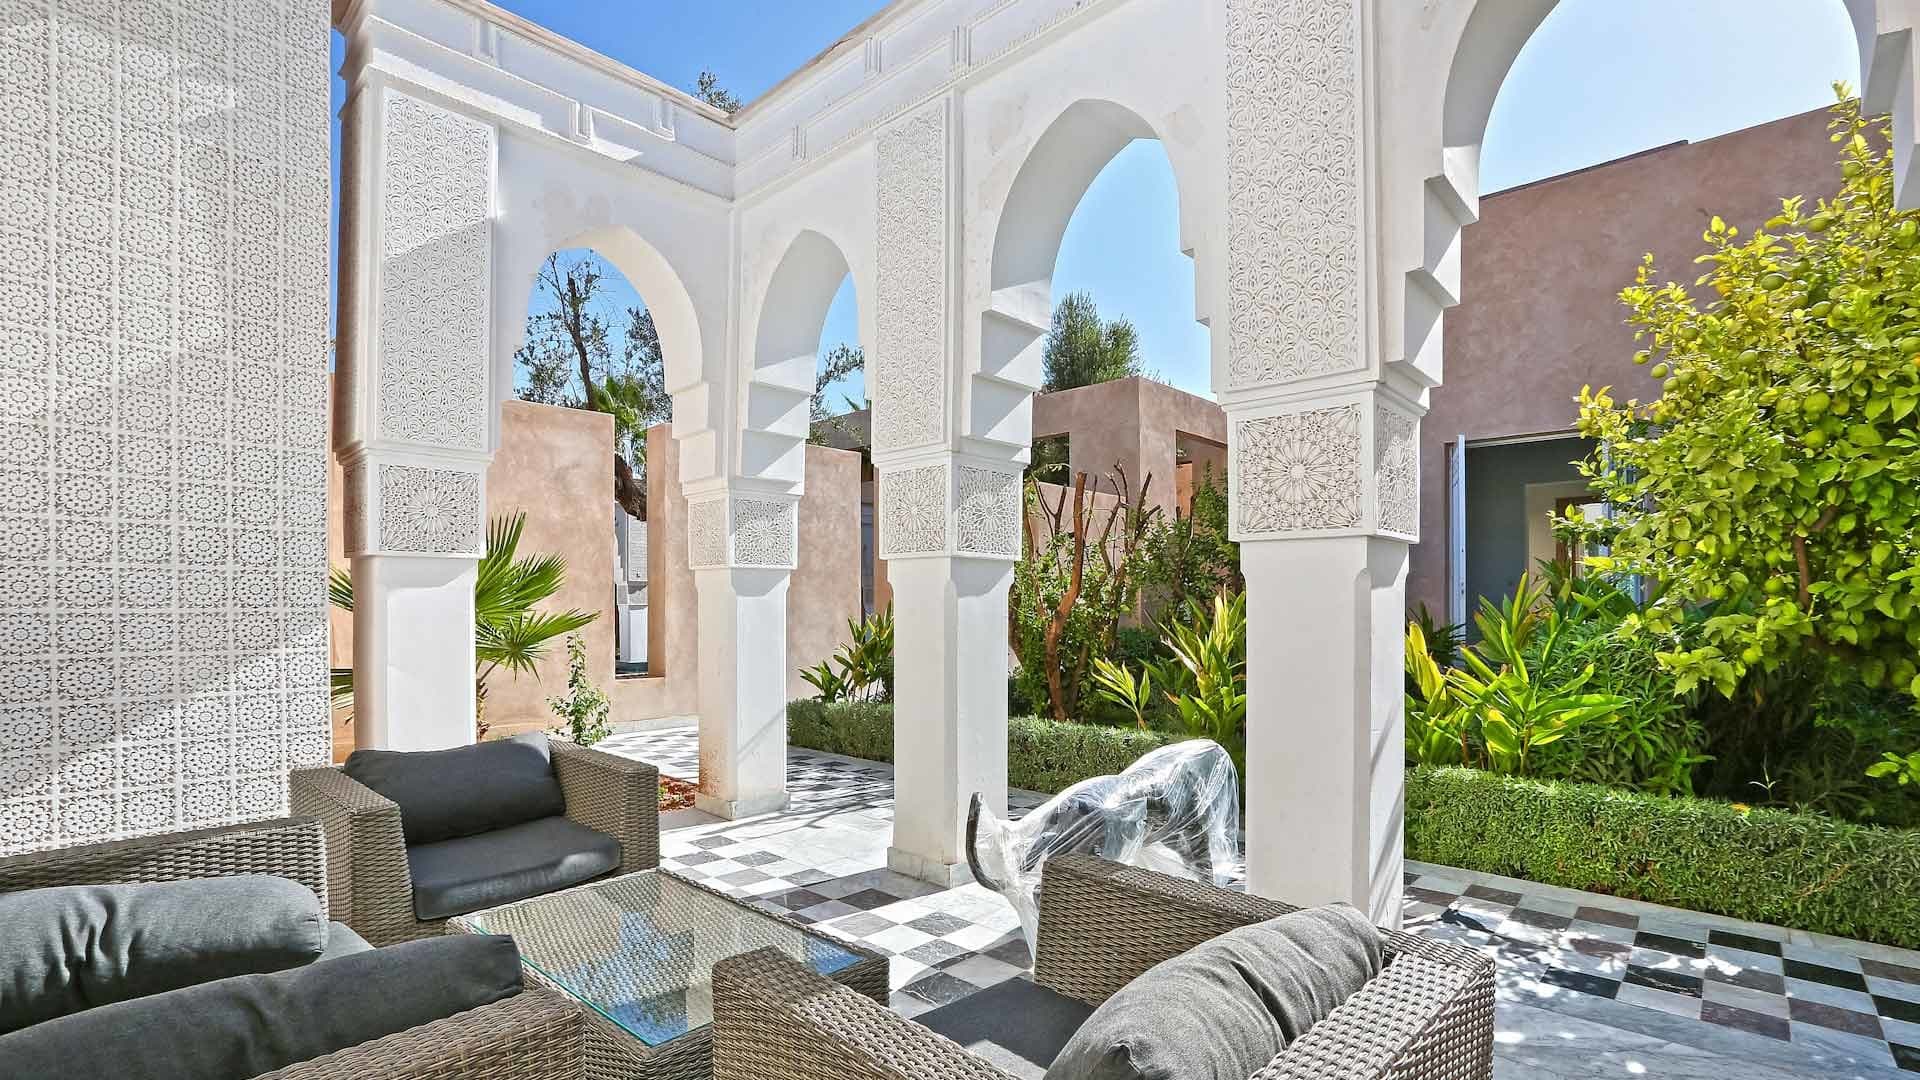 6 Bedroom Villa For Sale Marrakech Lp08723 2d689c8e3cb48600.jpg